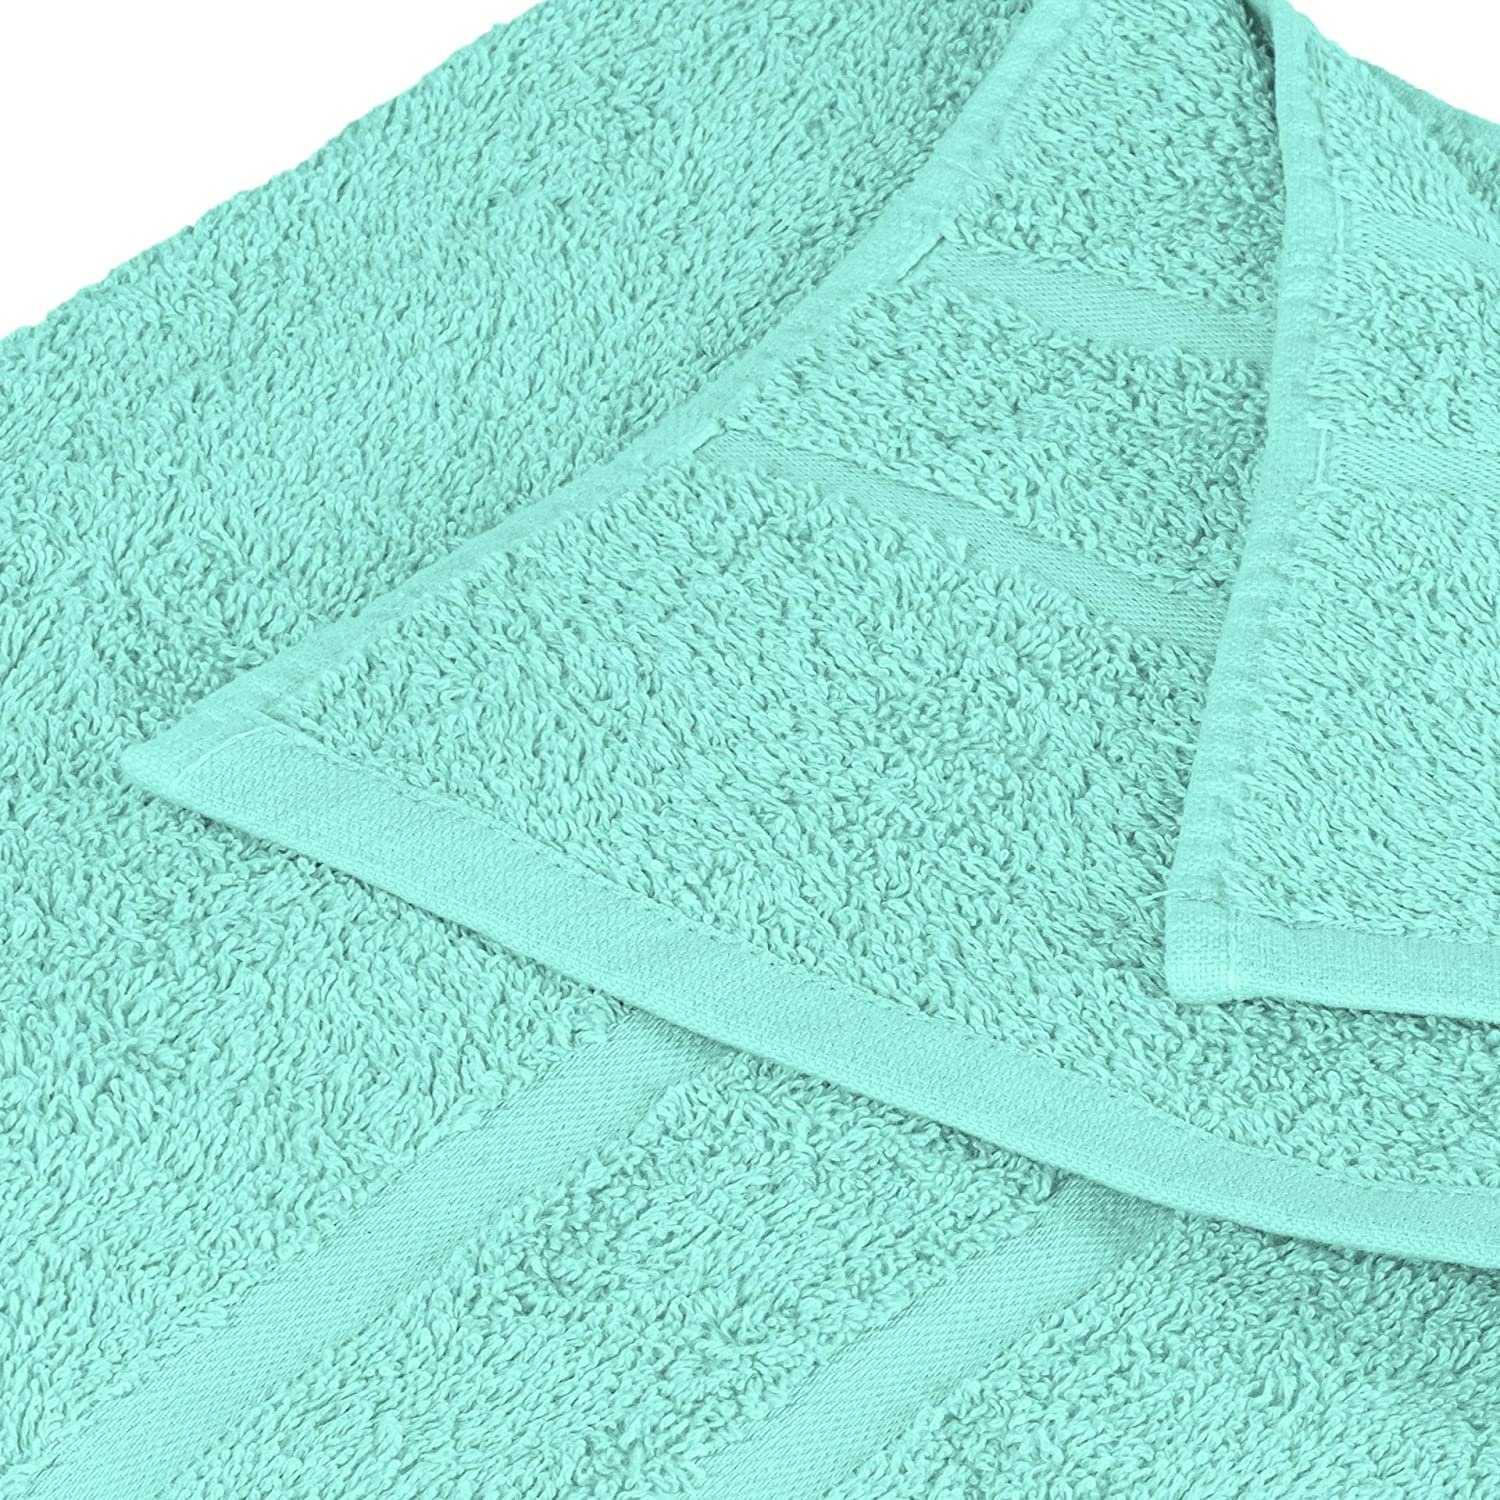 StickandShine Handtuch Set Baumwolle 100% verschiedenen SET Baumwolle Handtücher GSM 100% 16er Gästehandtuch 500 Badetücher Frottee 4x 6x Handtuch Pack, GSM als Mint 2x Duschtücher Teilig) in (16 500 Farben 4x